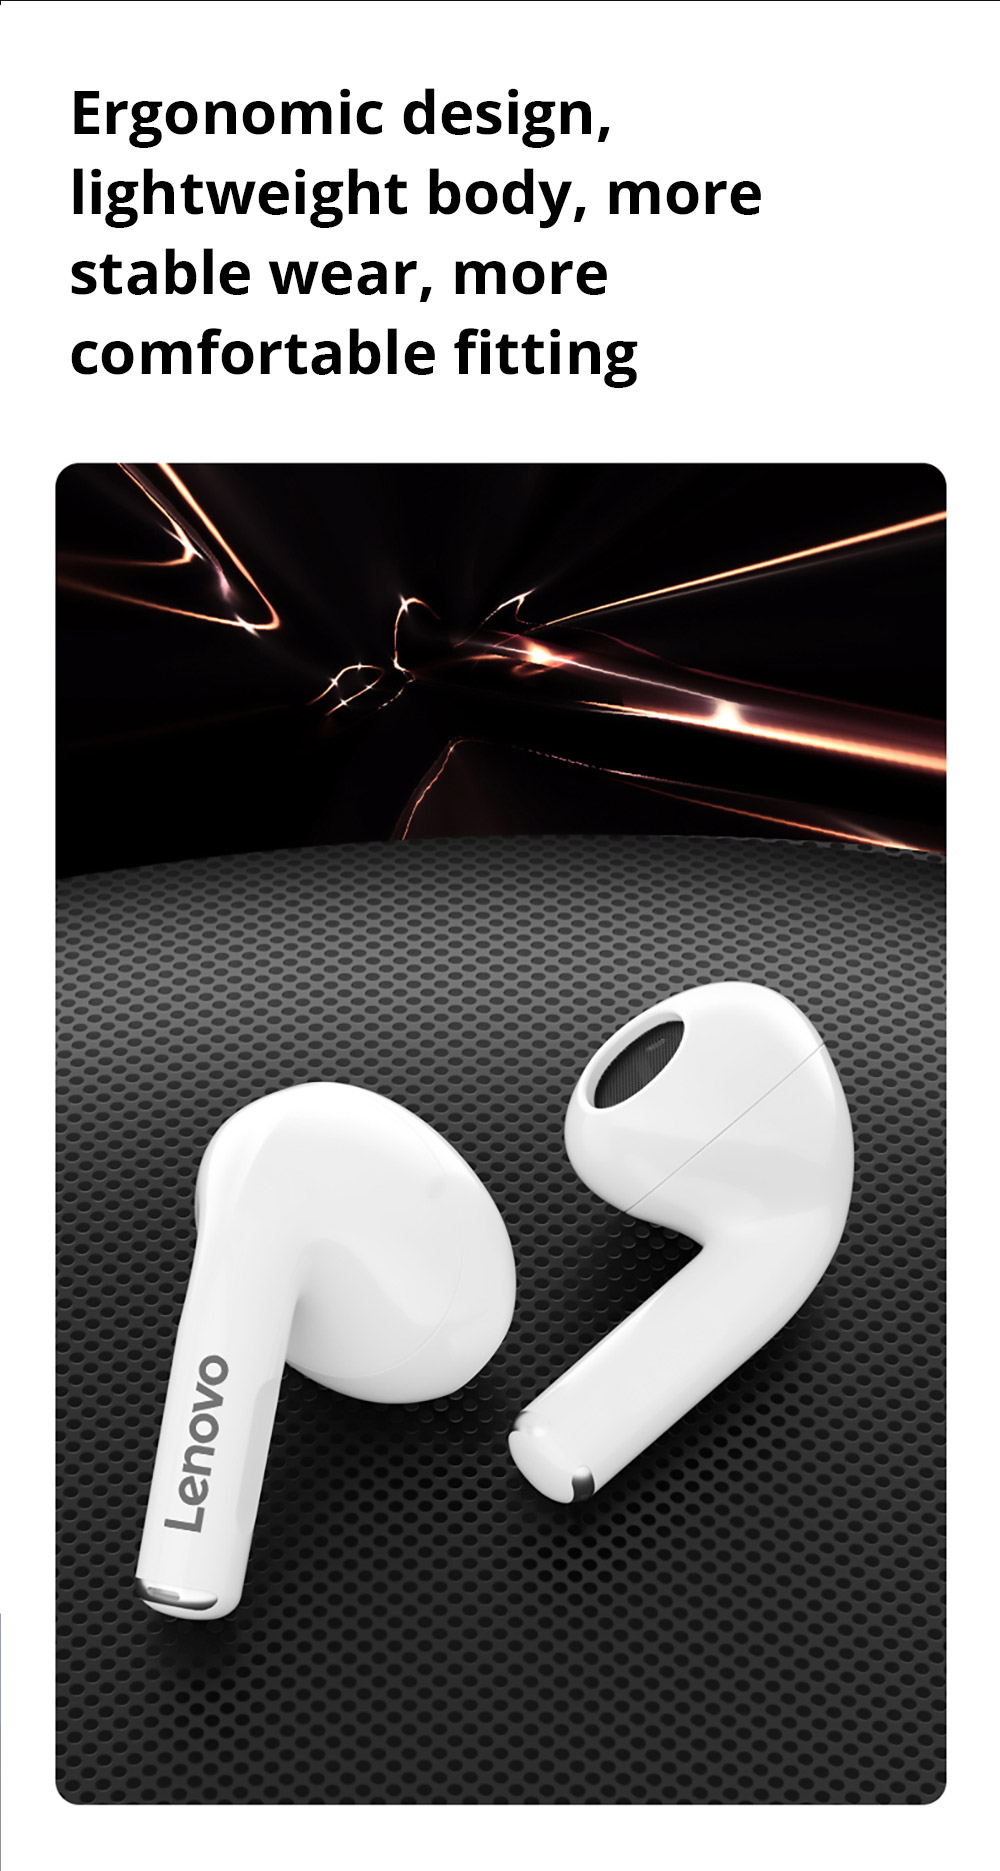 Lenovo Thinkplus LP80 Pro TWS Earphones Wireless Bluetooth Headphones Dynamic Low Latency Gaming Sports Earbuds - White